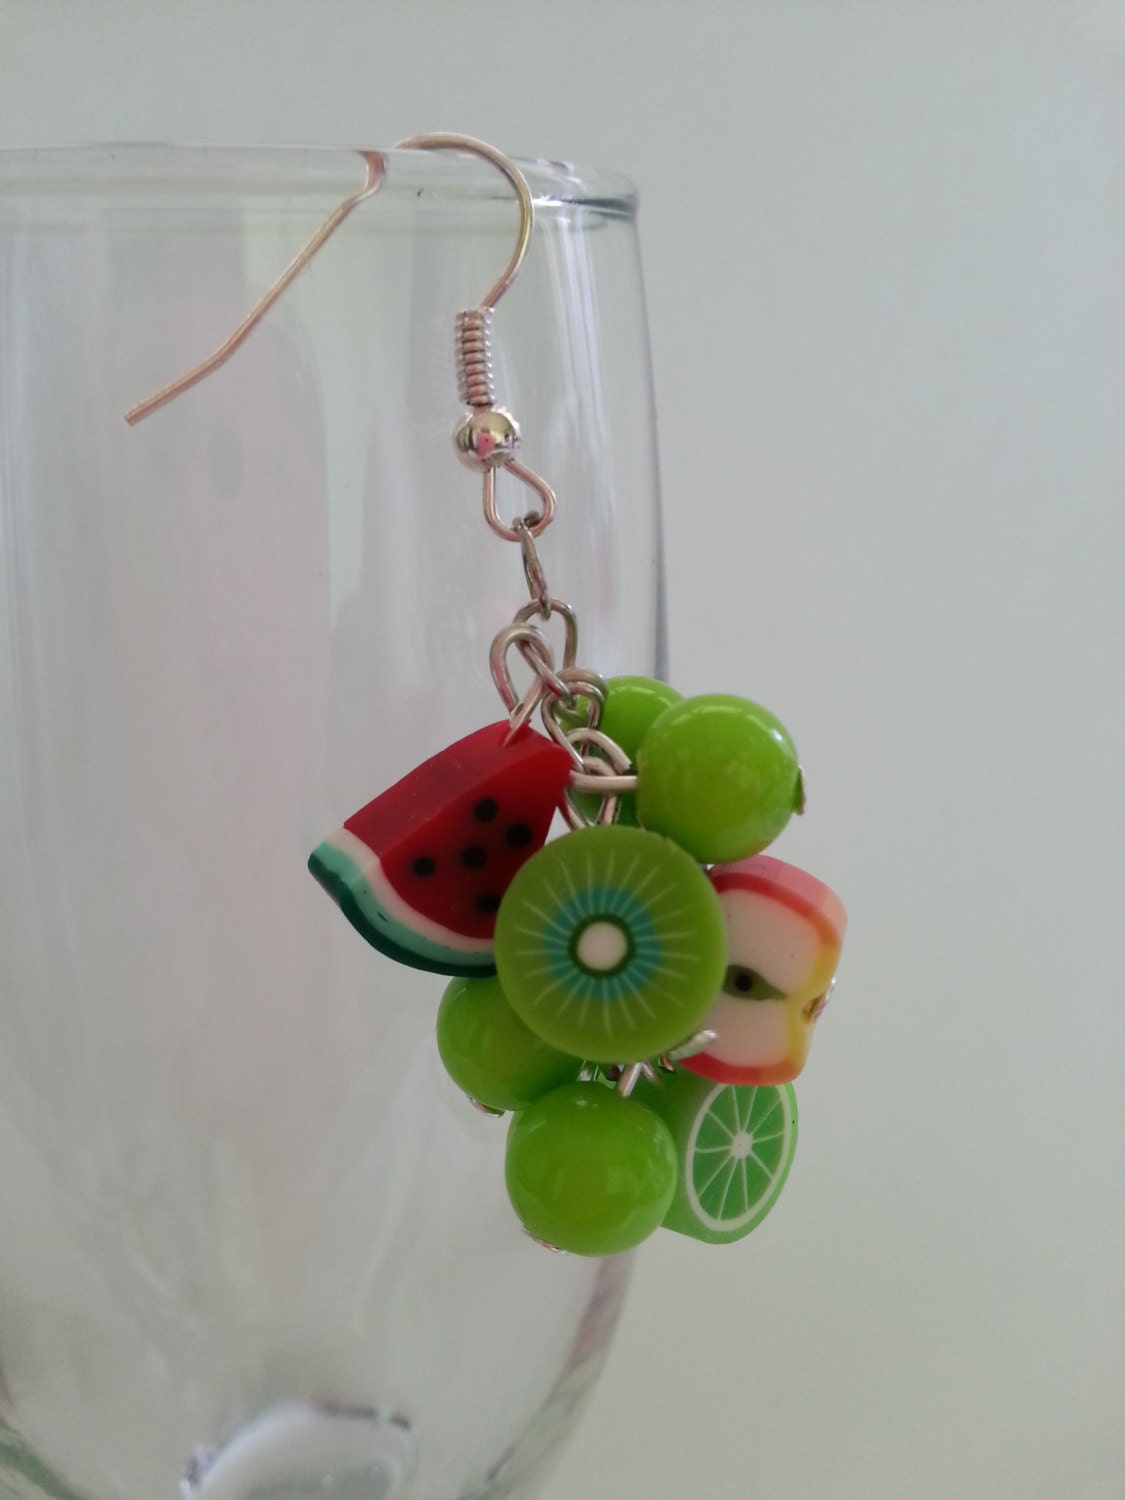 Green Earrings "Fruits" Handmade Stylish Accsessory